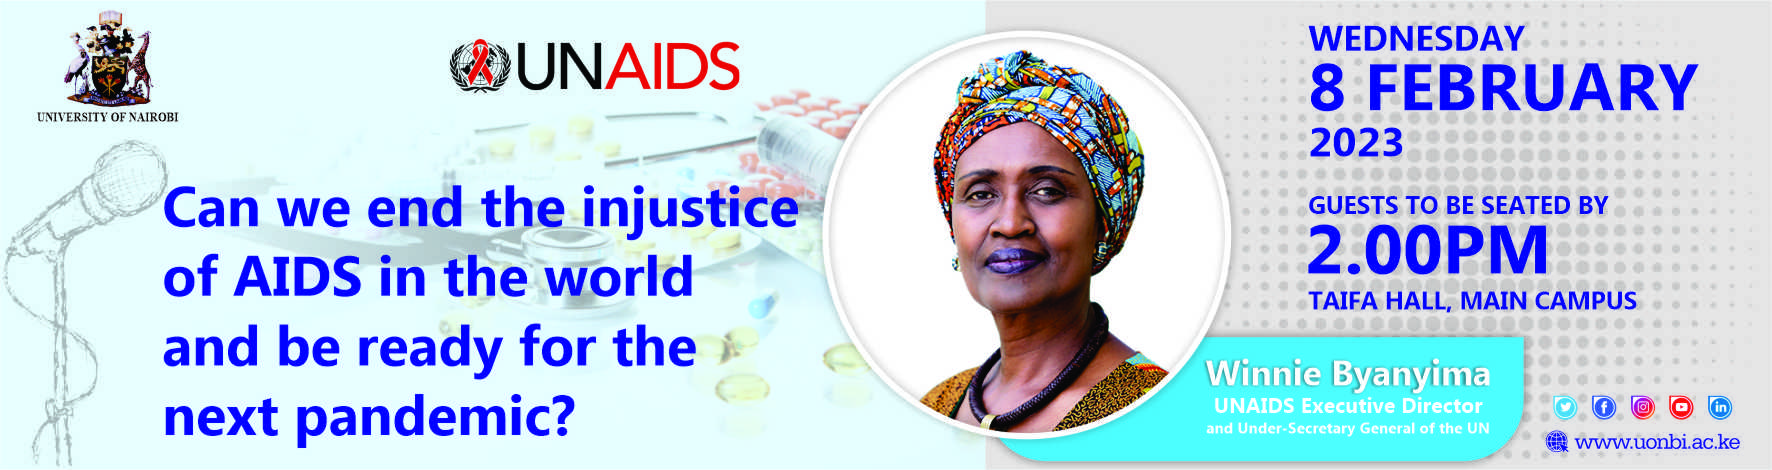 UoN-UNAIDS Poster 2.jpg